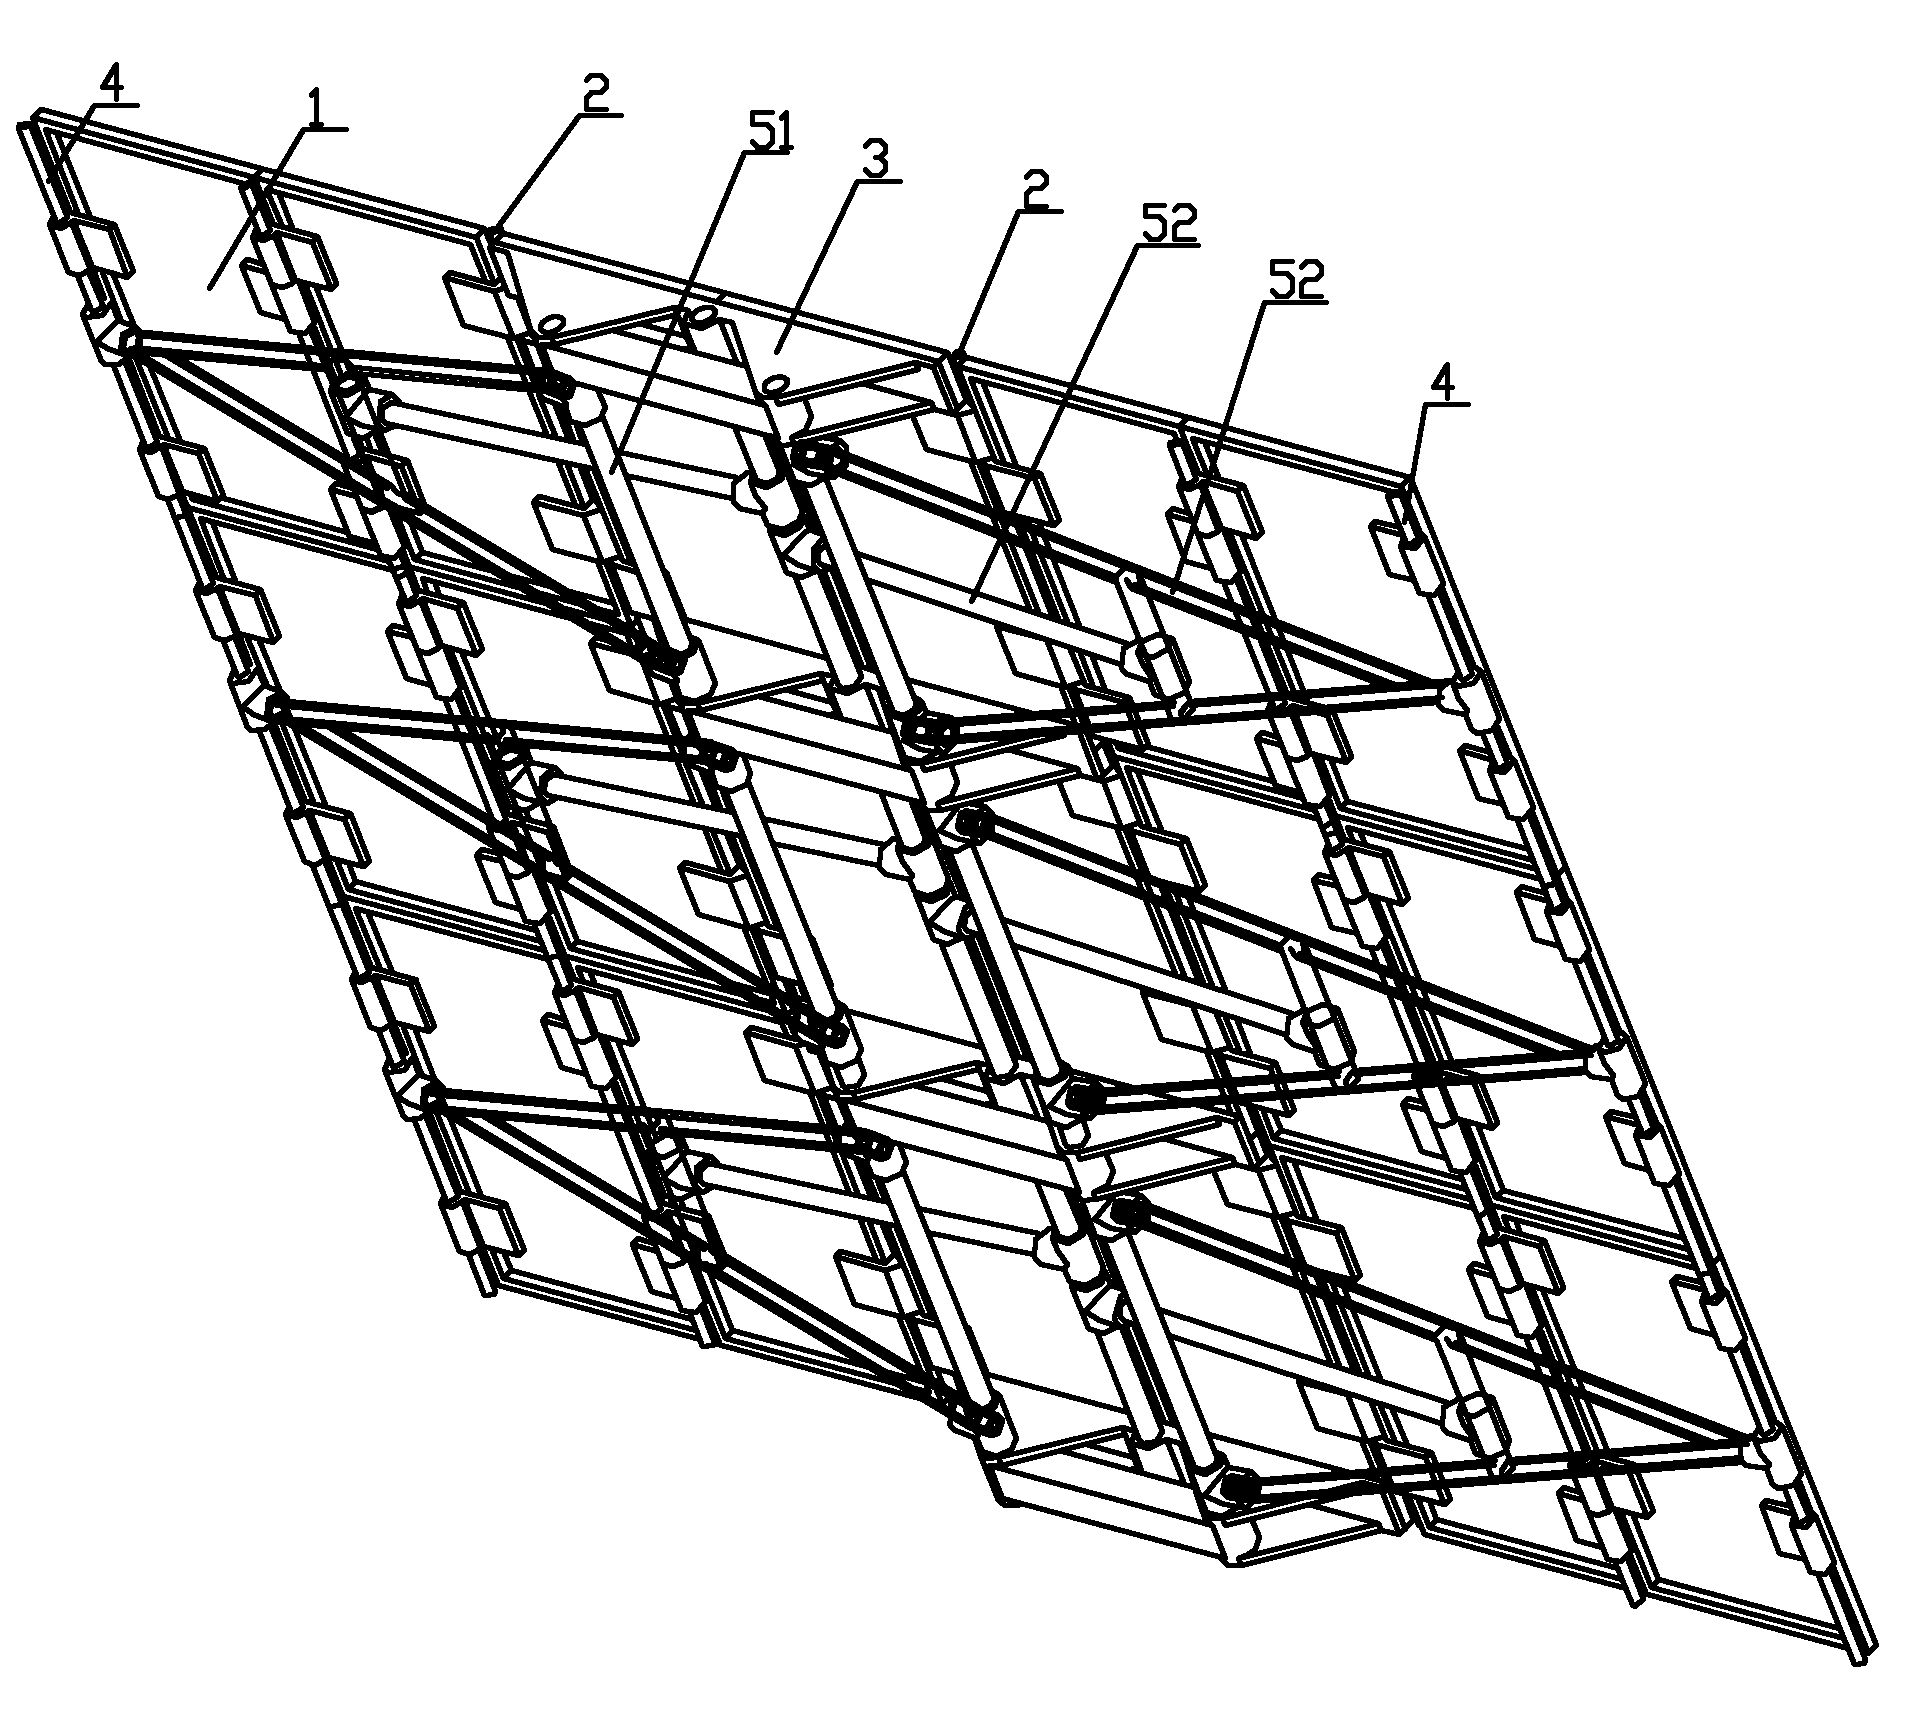 Foldable solar sailboard